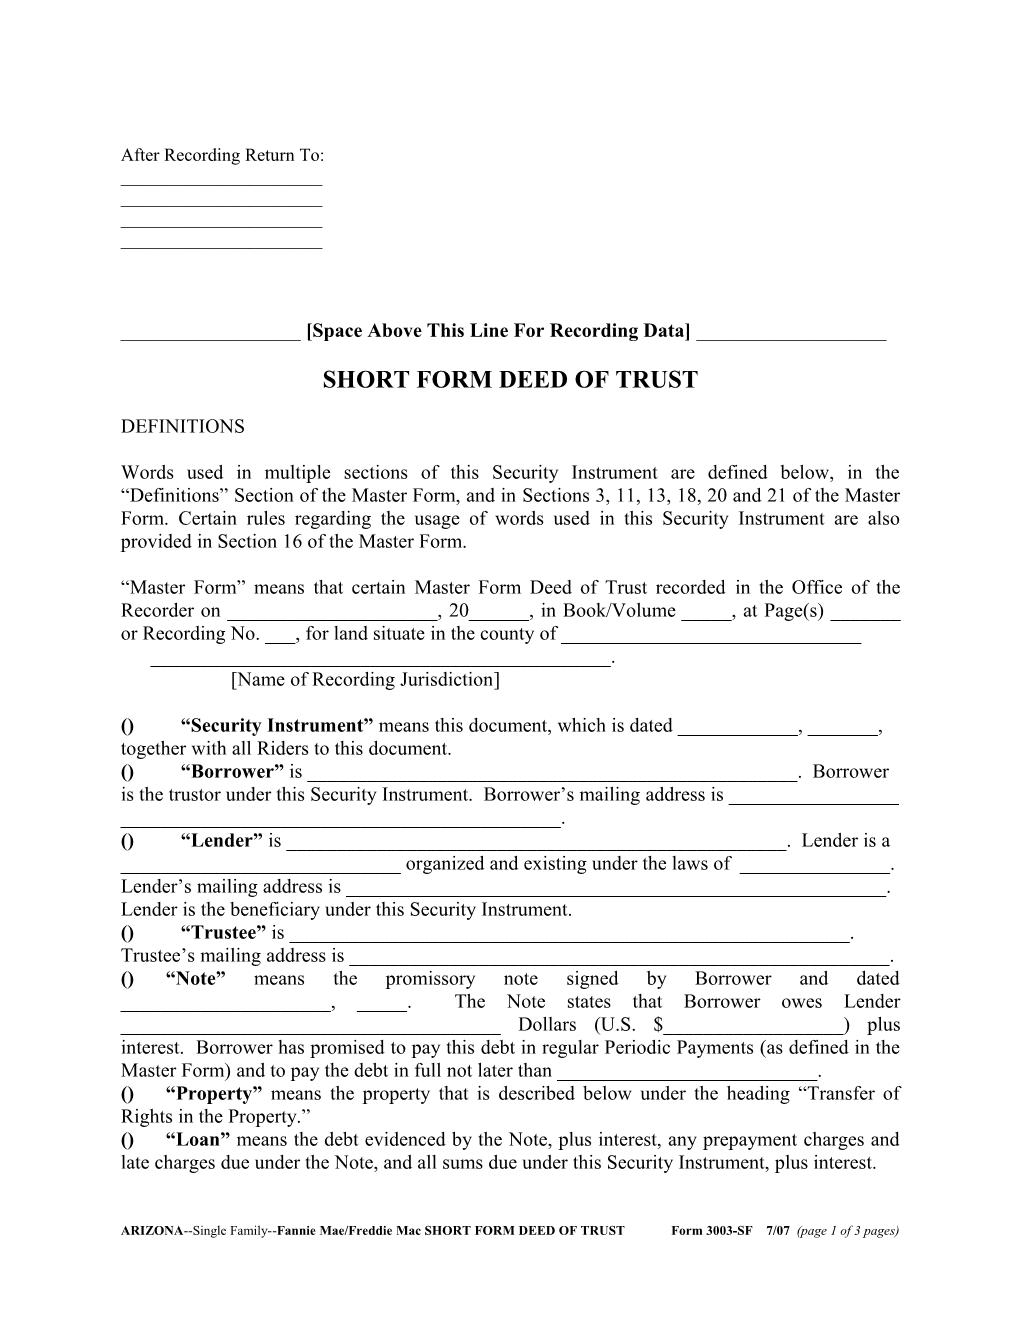 Arizona Security Instrument (Form 3003Sf): Word